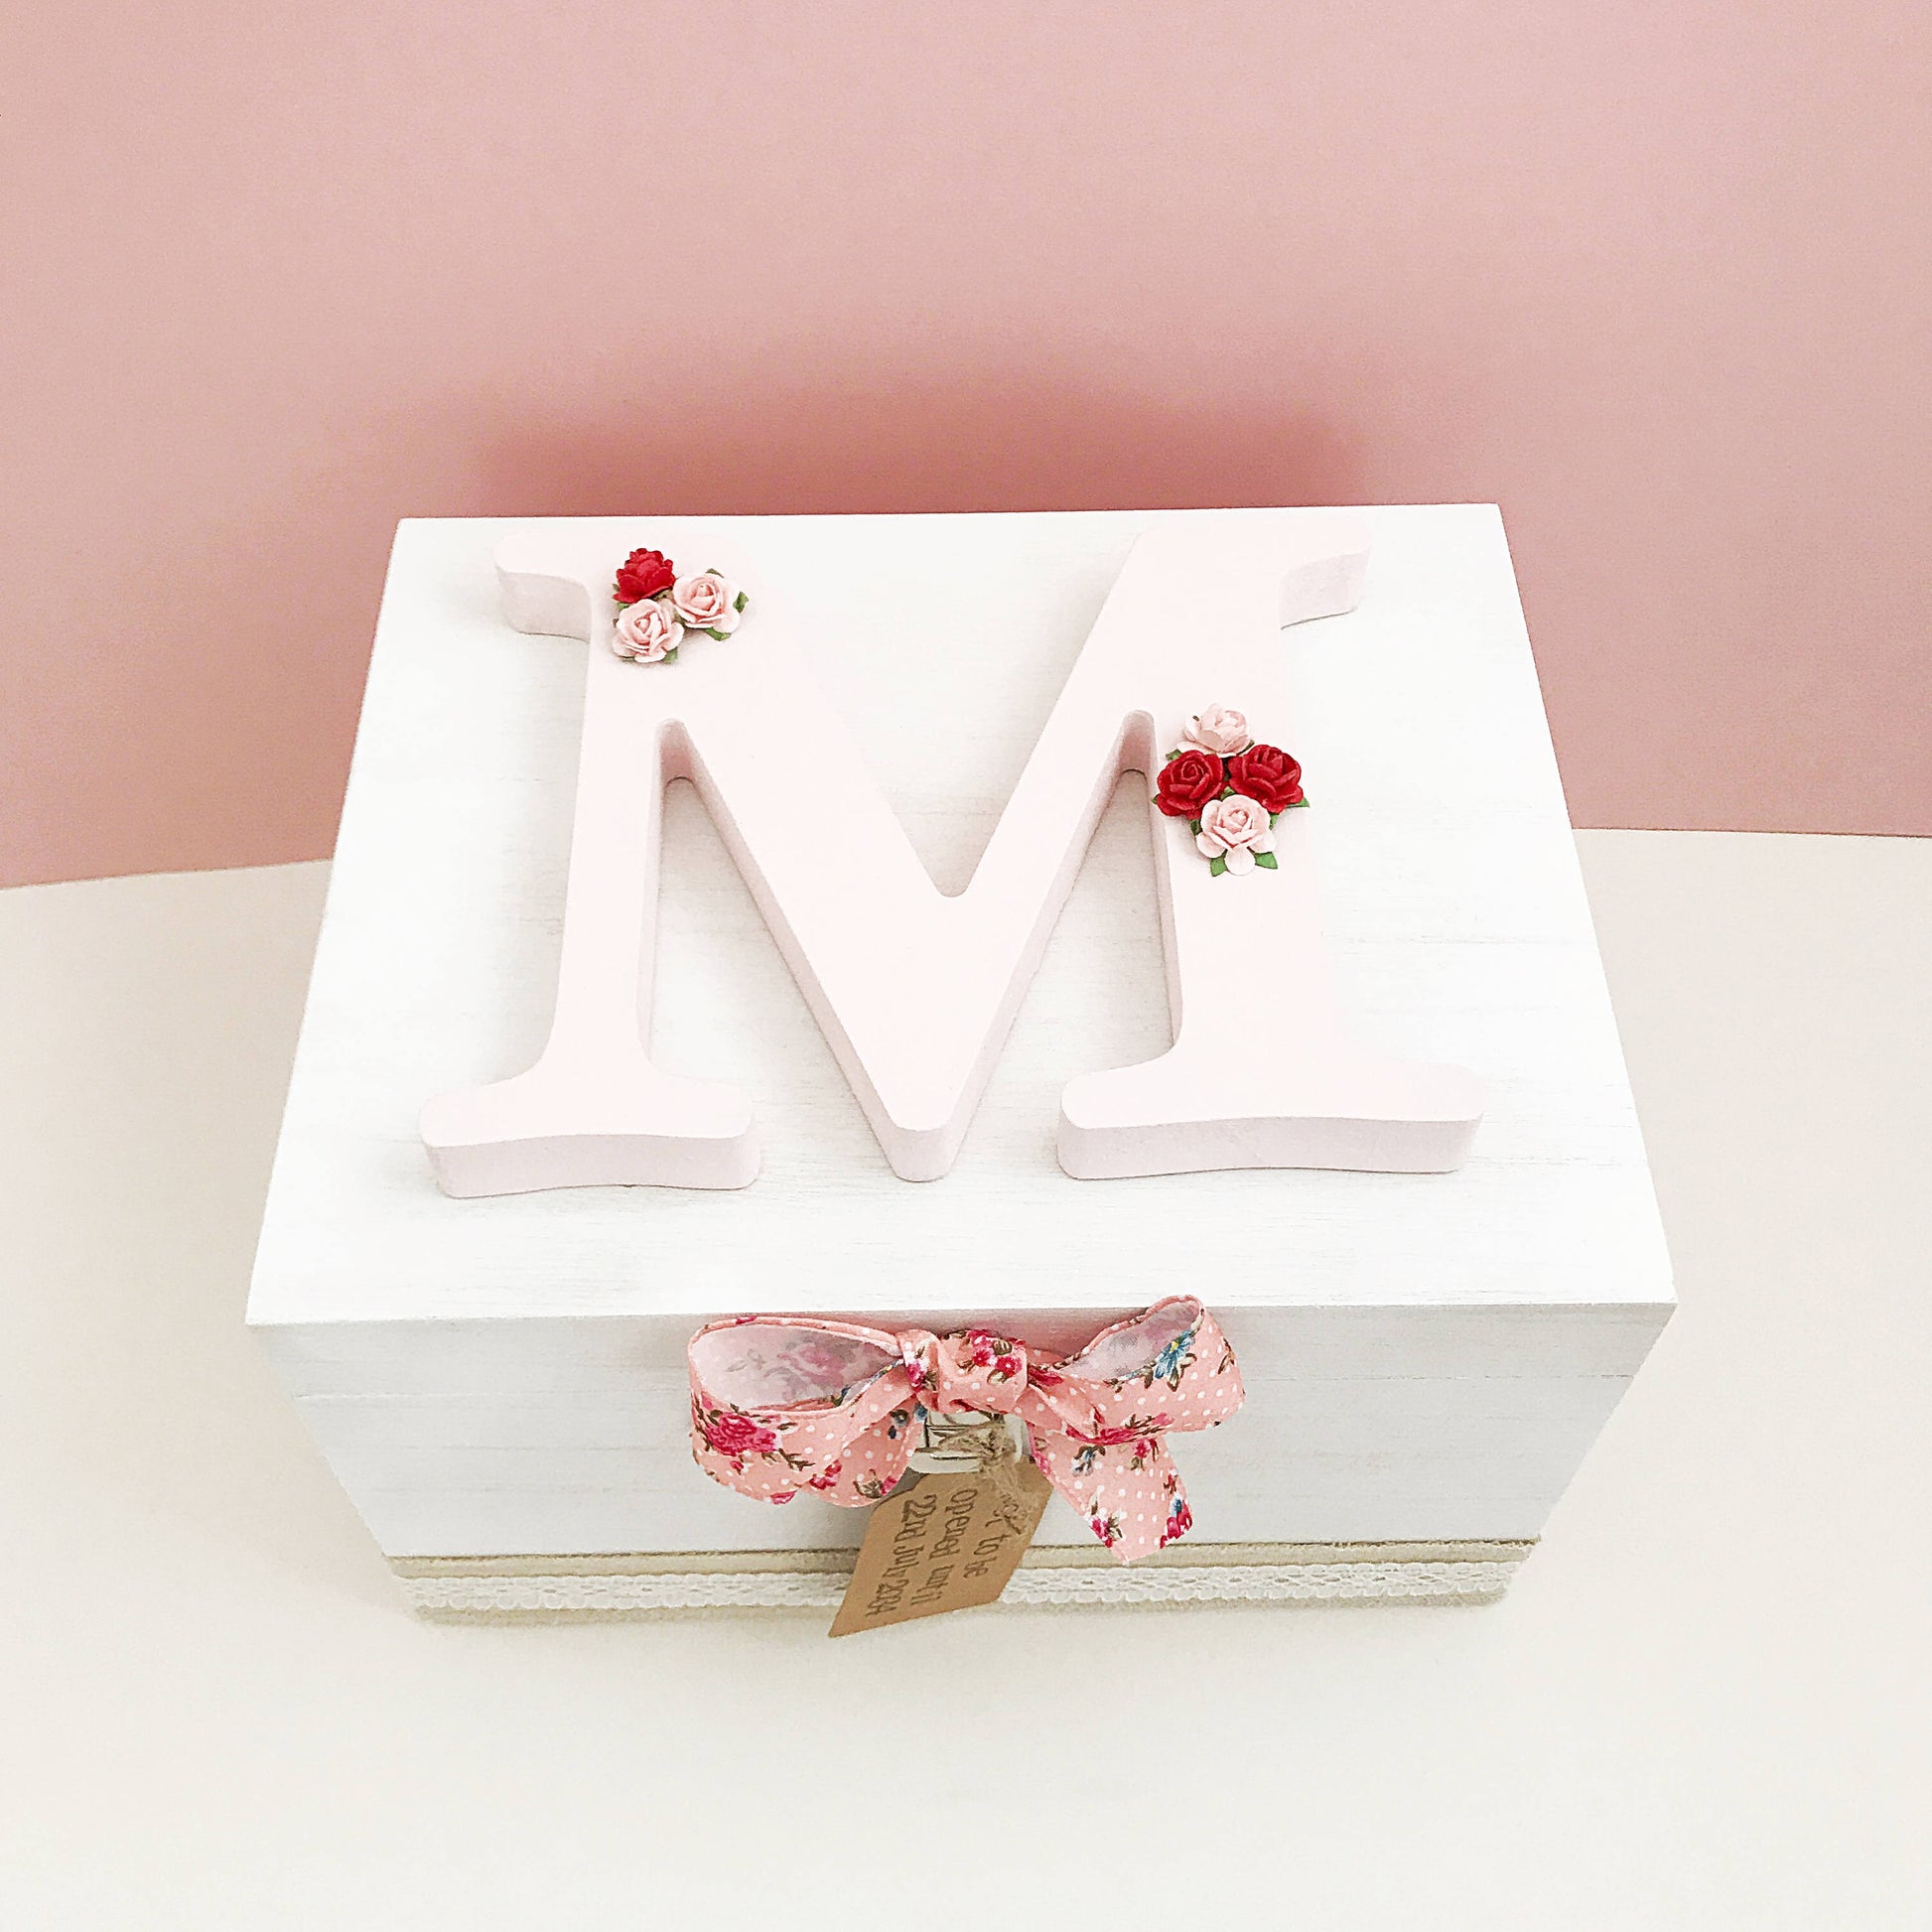 Pink Floral Wooden Keepsake Box